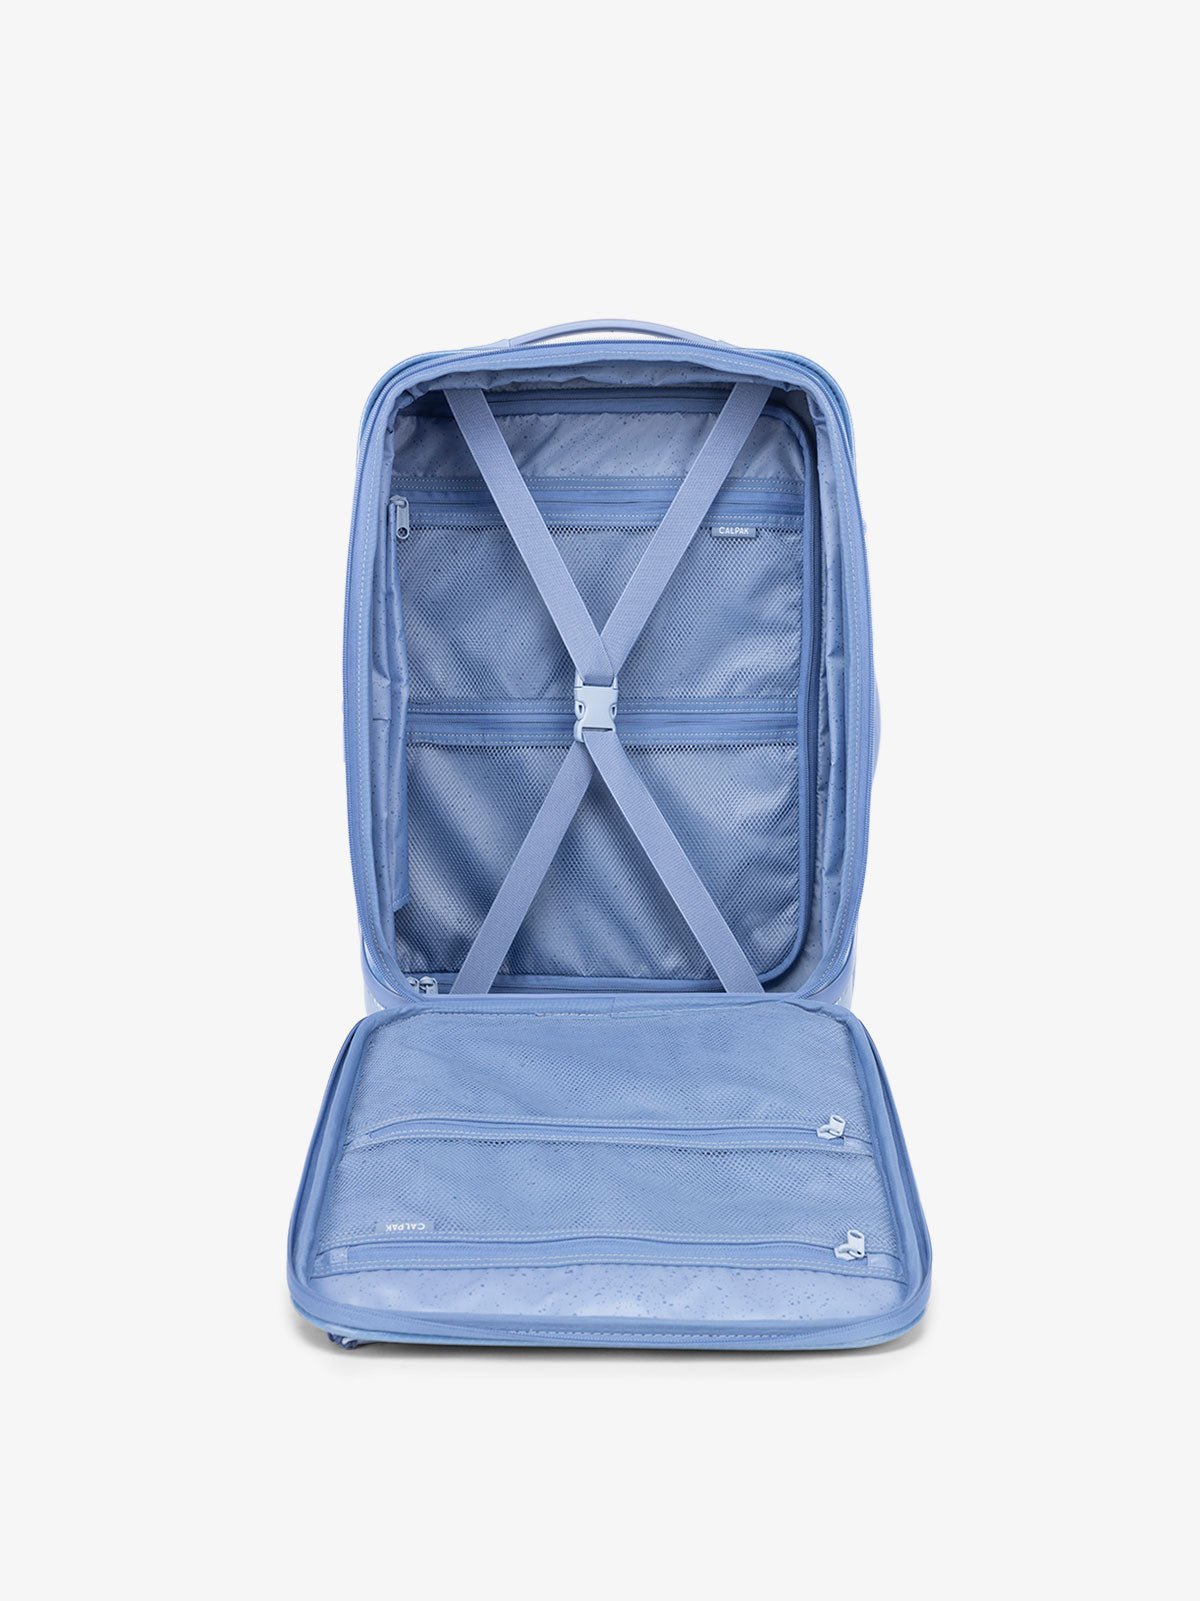 CALPAK Terra Carry-On Luggage interior with compression strap in glacier